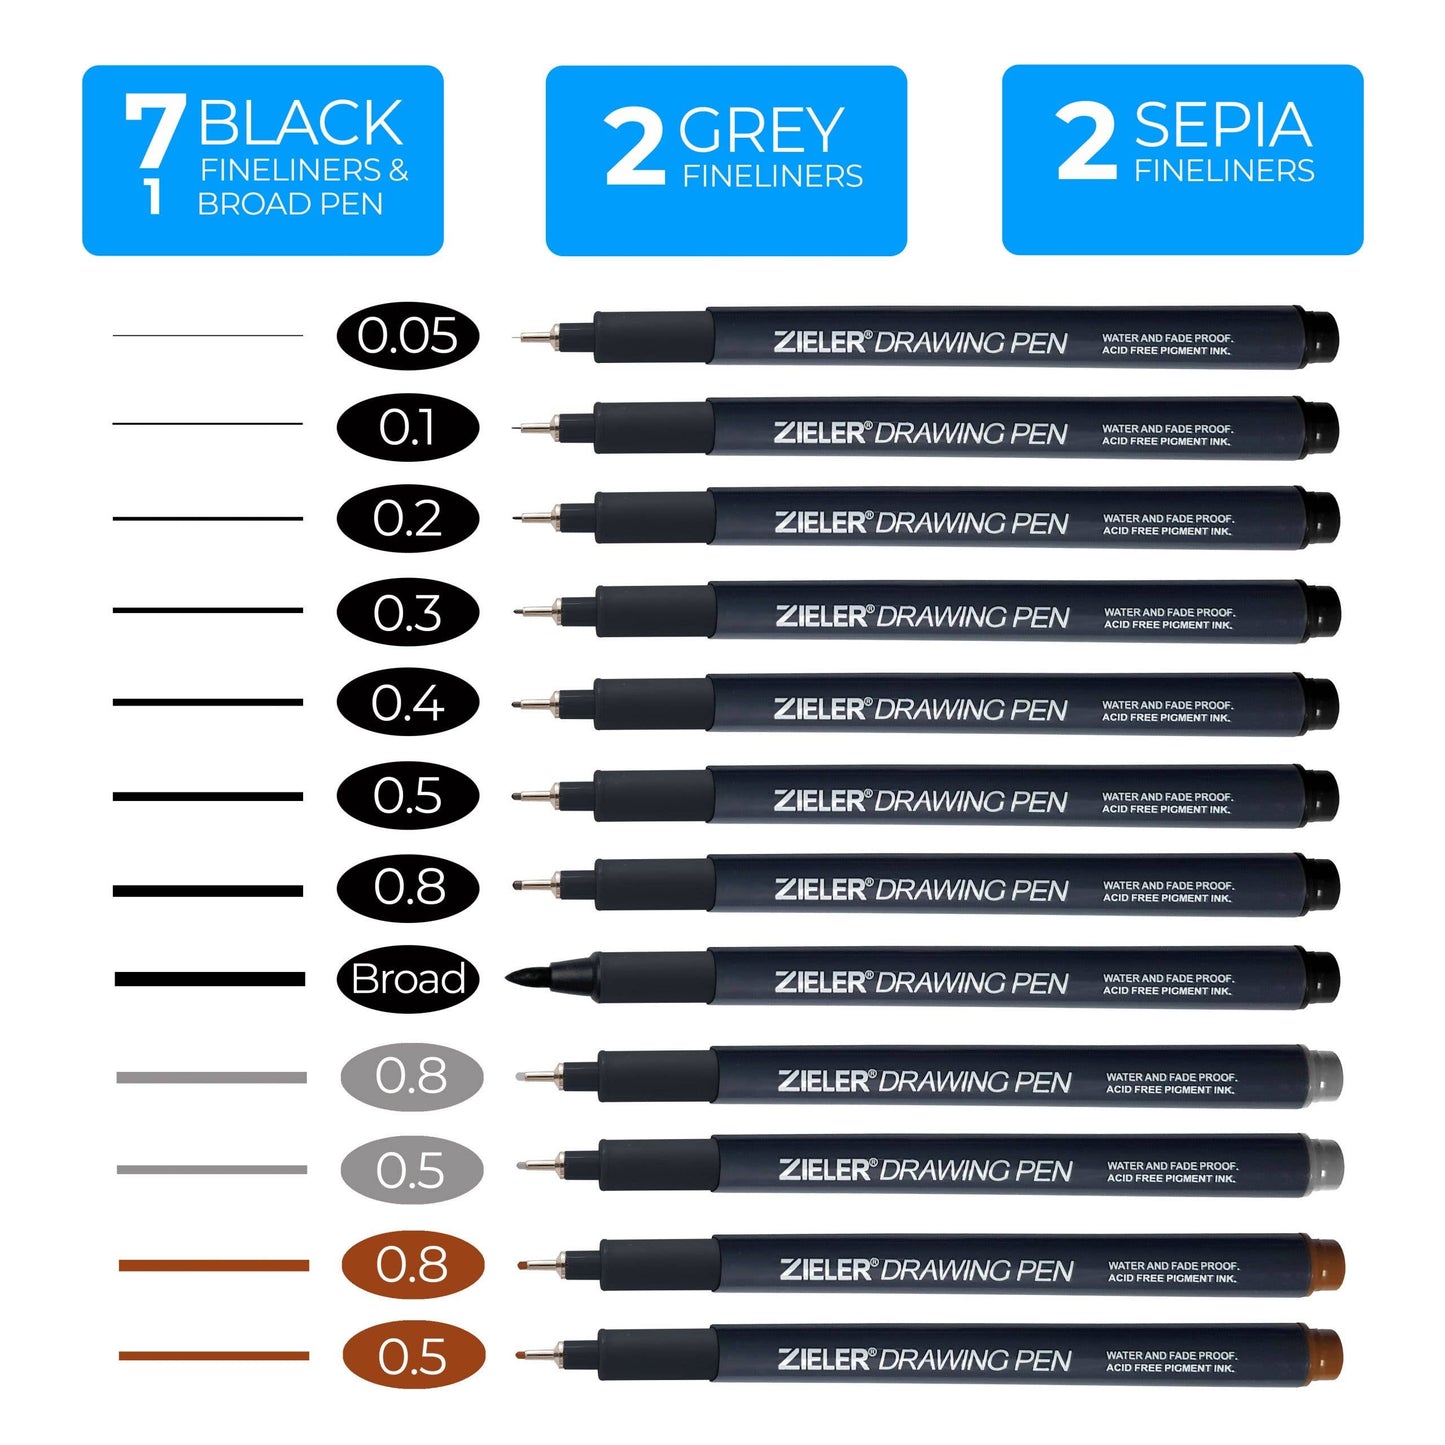 12 Fineliner Drawing Pens | Black, Sepia & Grey